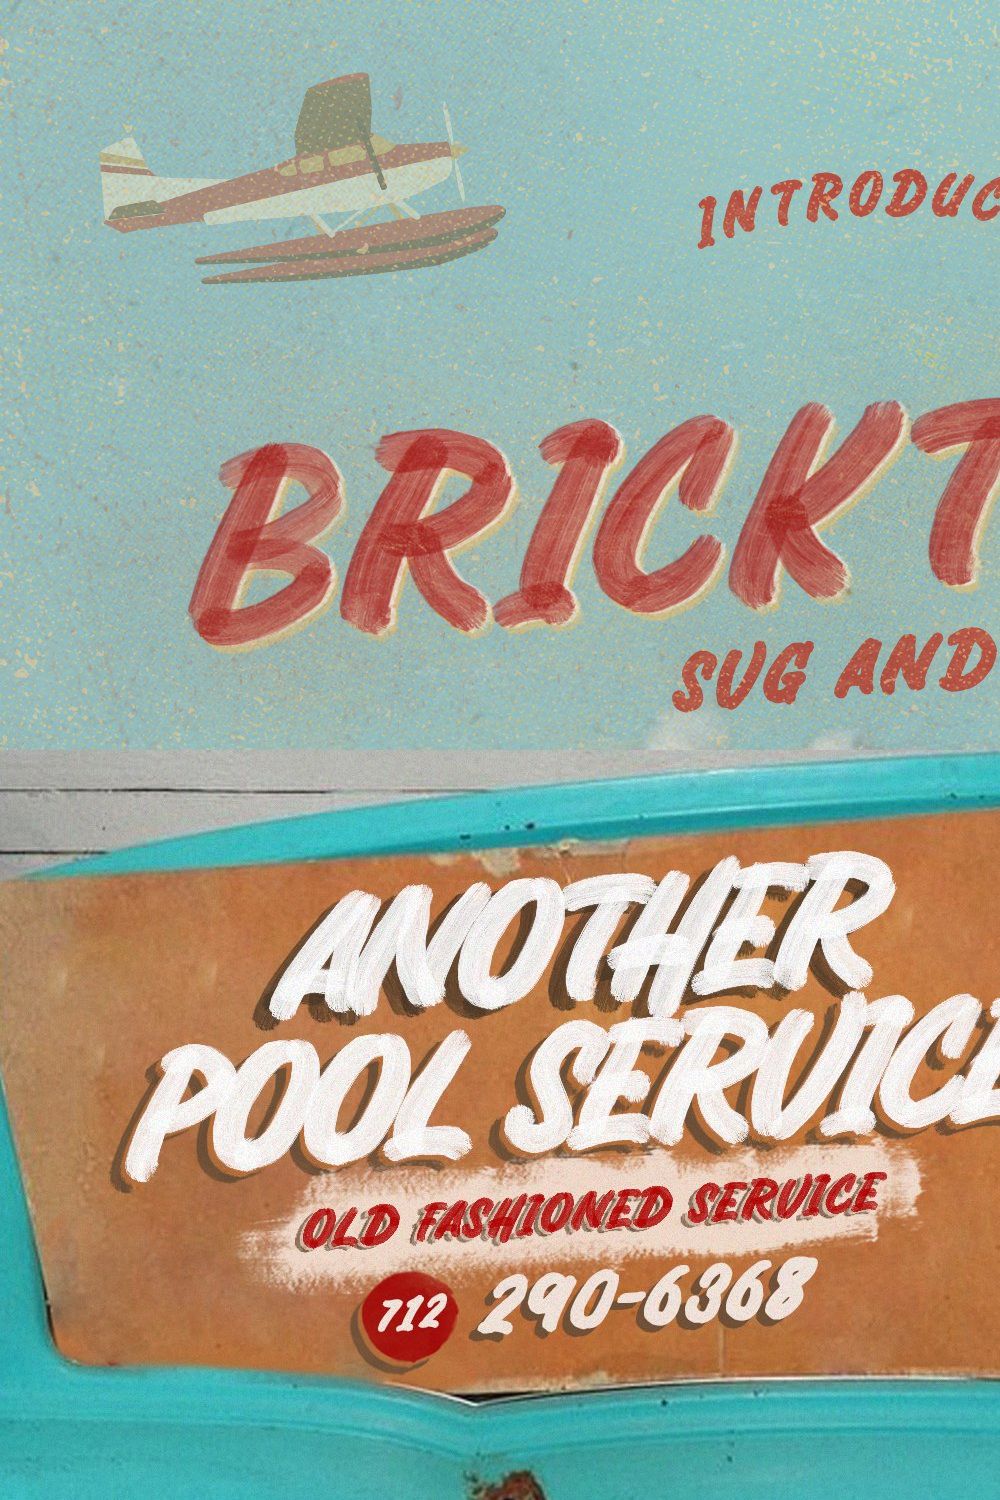 Bricktoms SVG & REGULAR pinterest preview image.